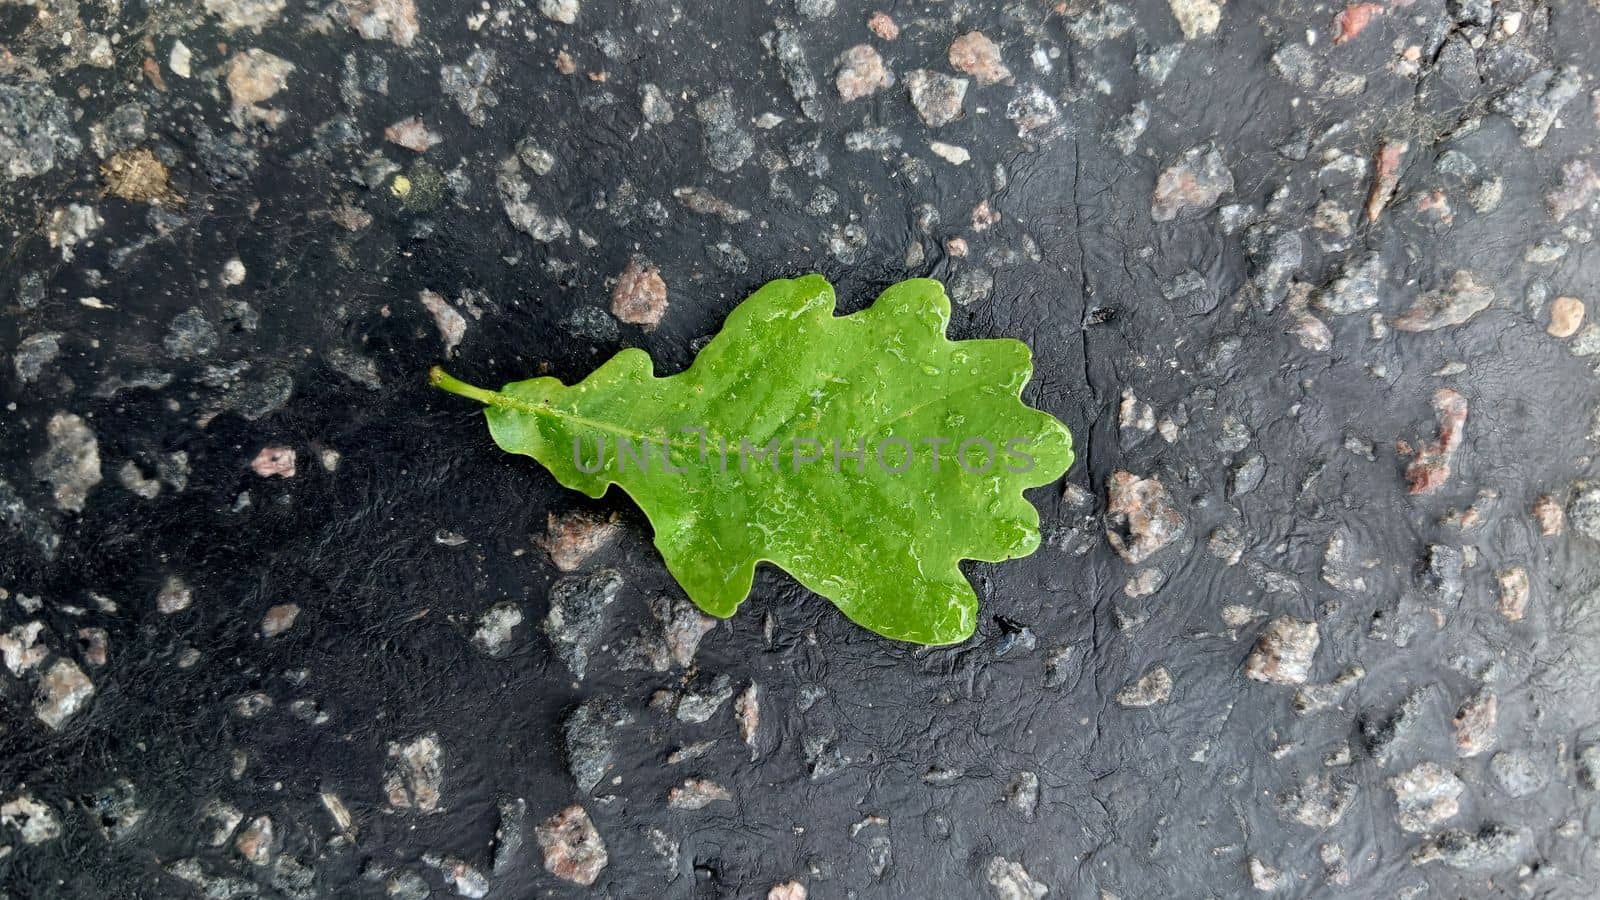 An oak leaf with raindrops on the surface lies on the asphalt by Mastak80